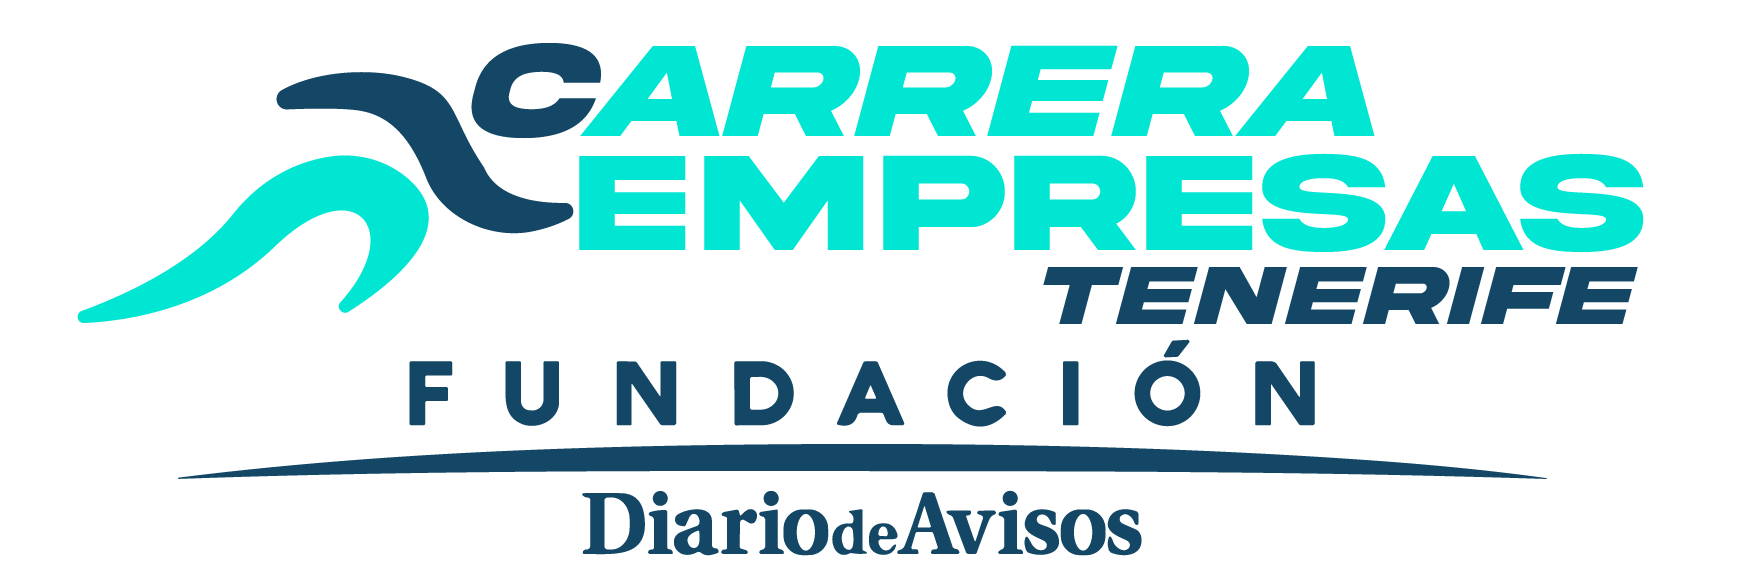 Carrera Empresas Tenerife Logo